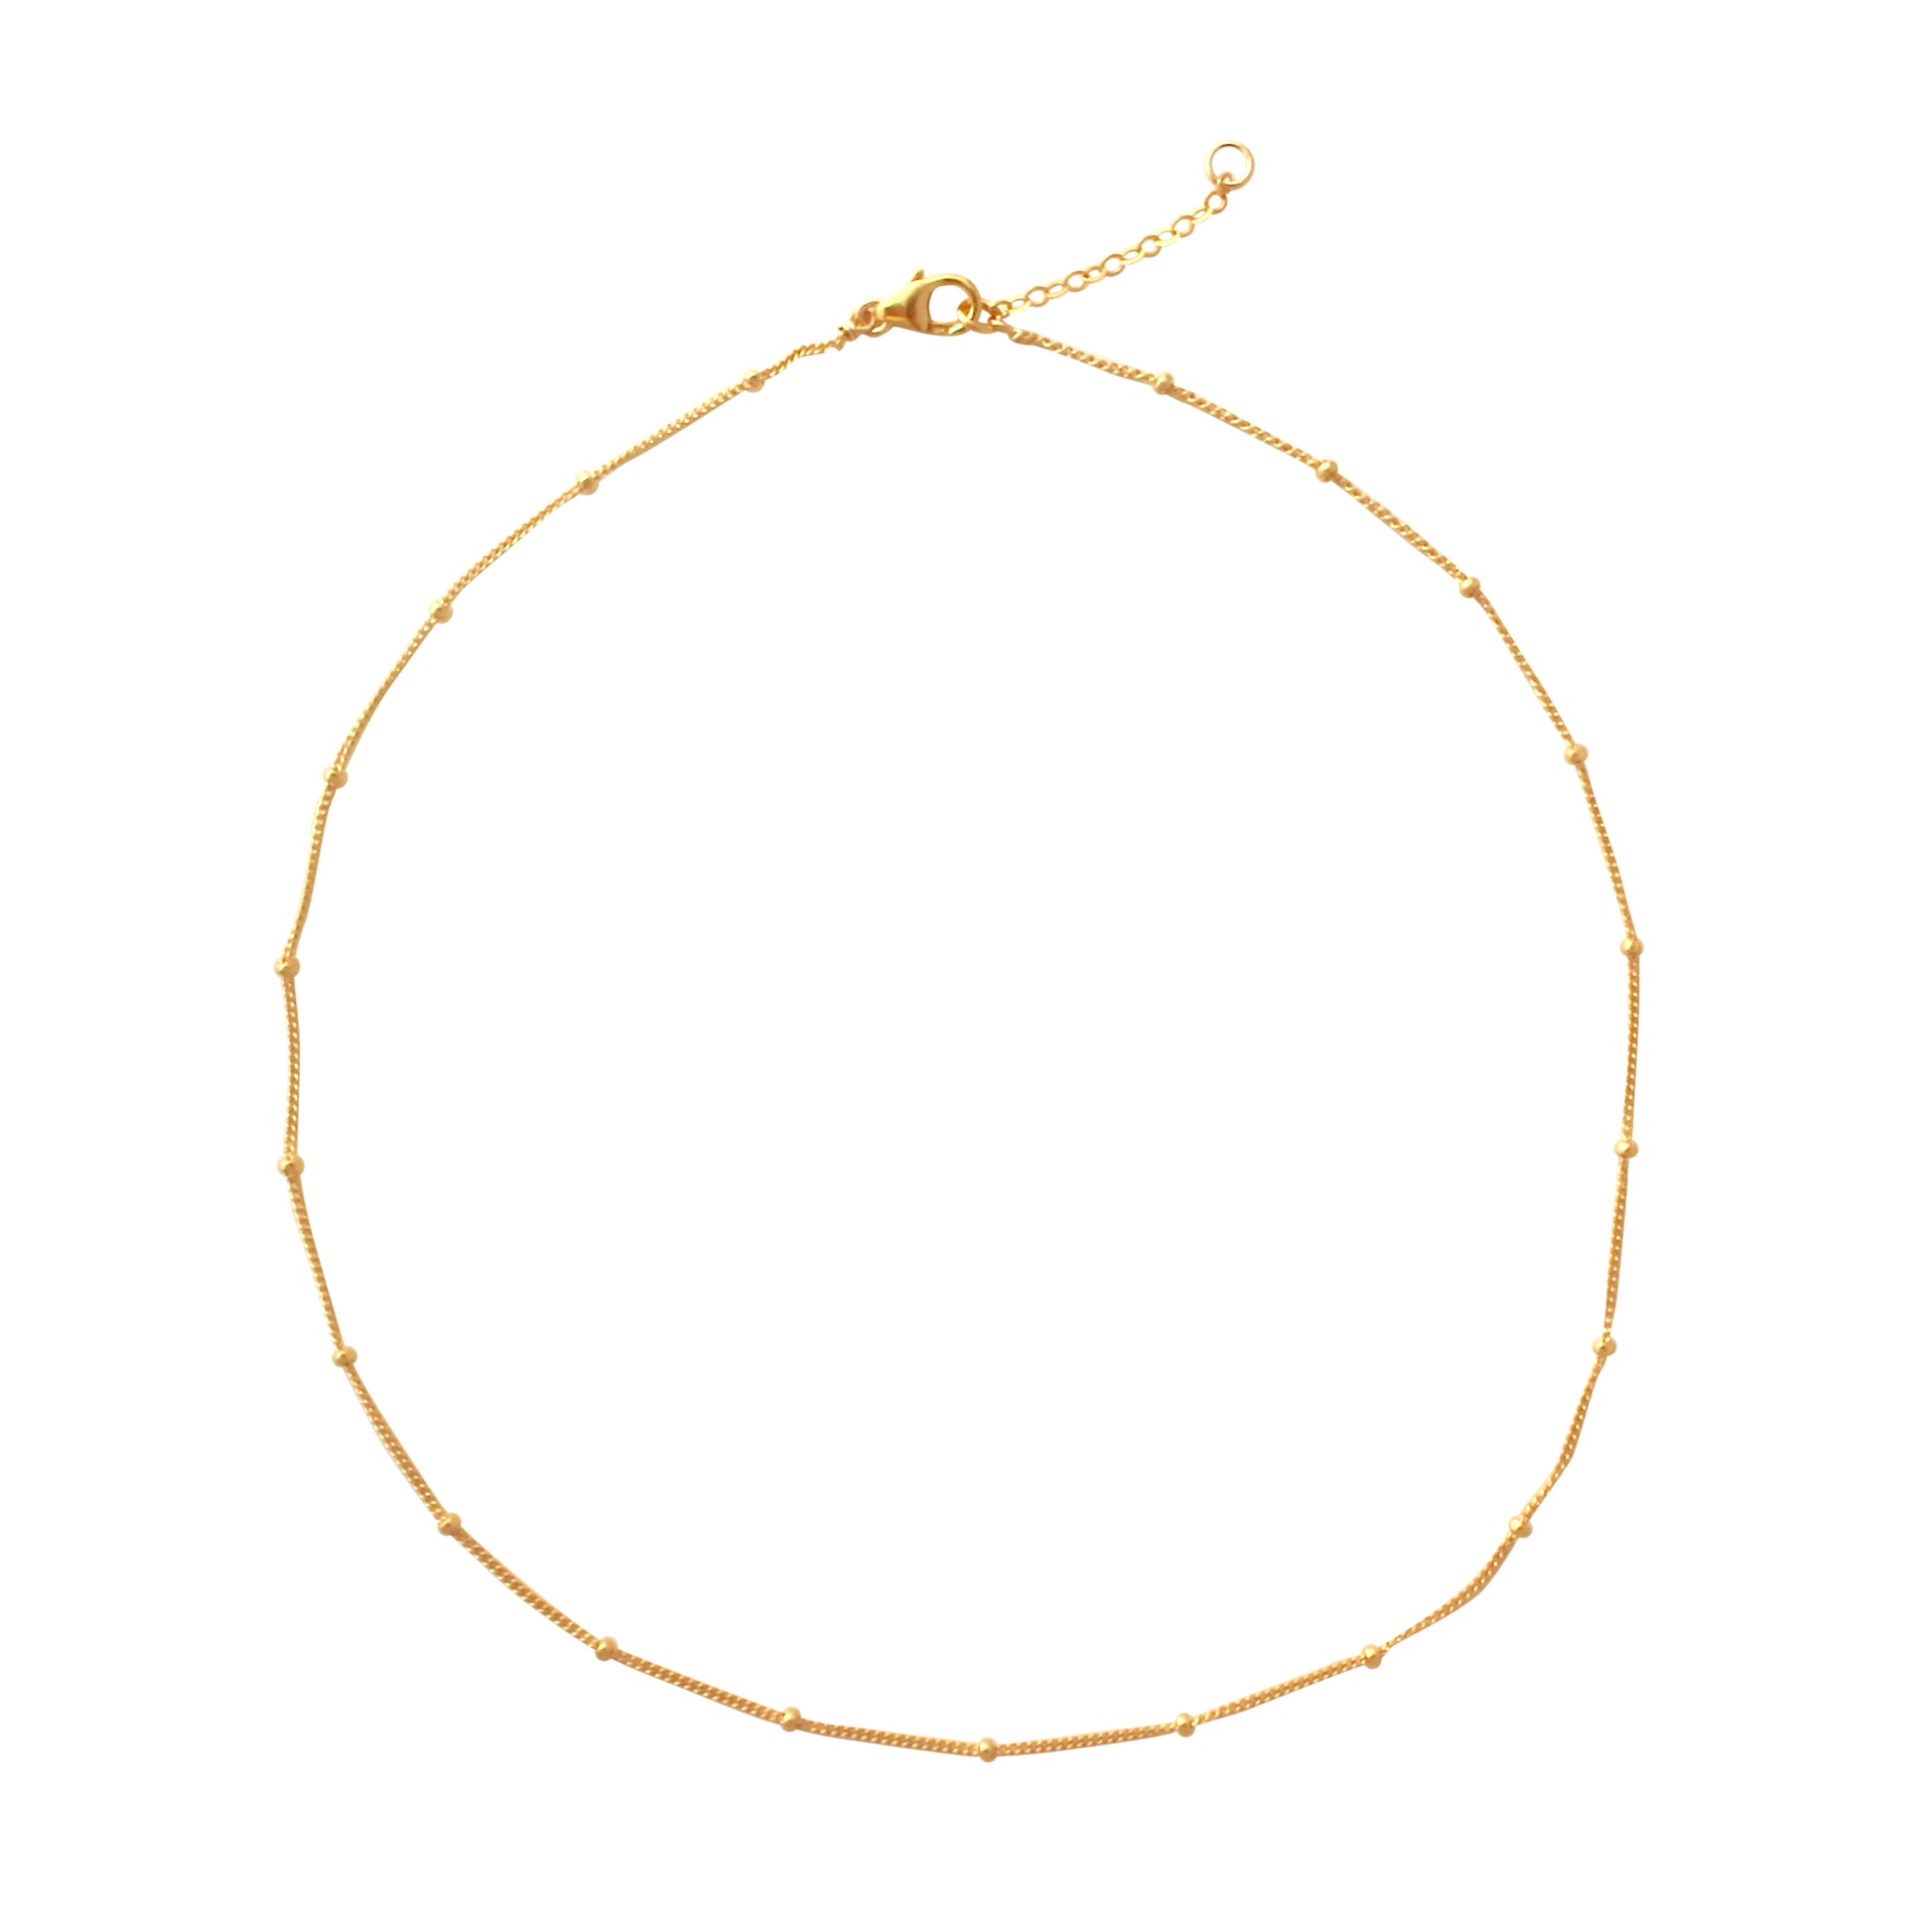 Gold Satellite chain choker necklace